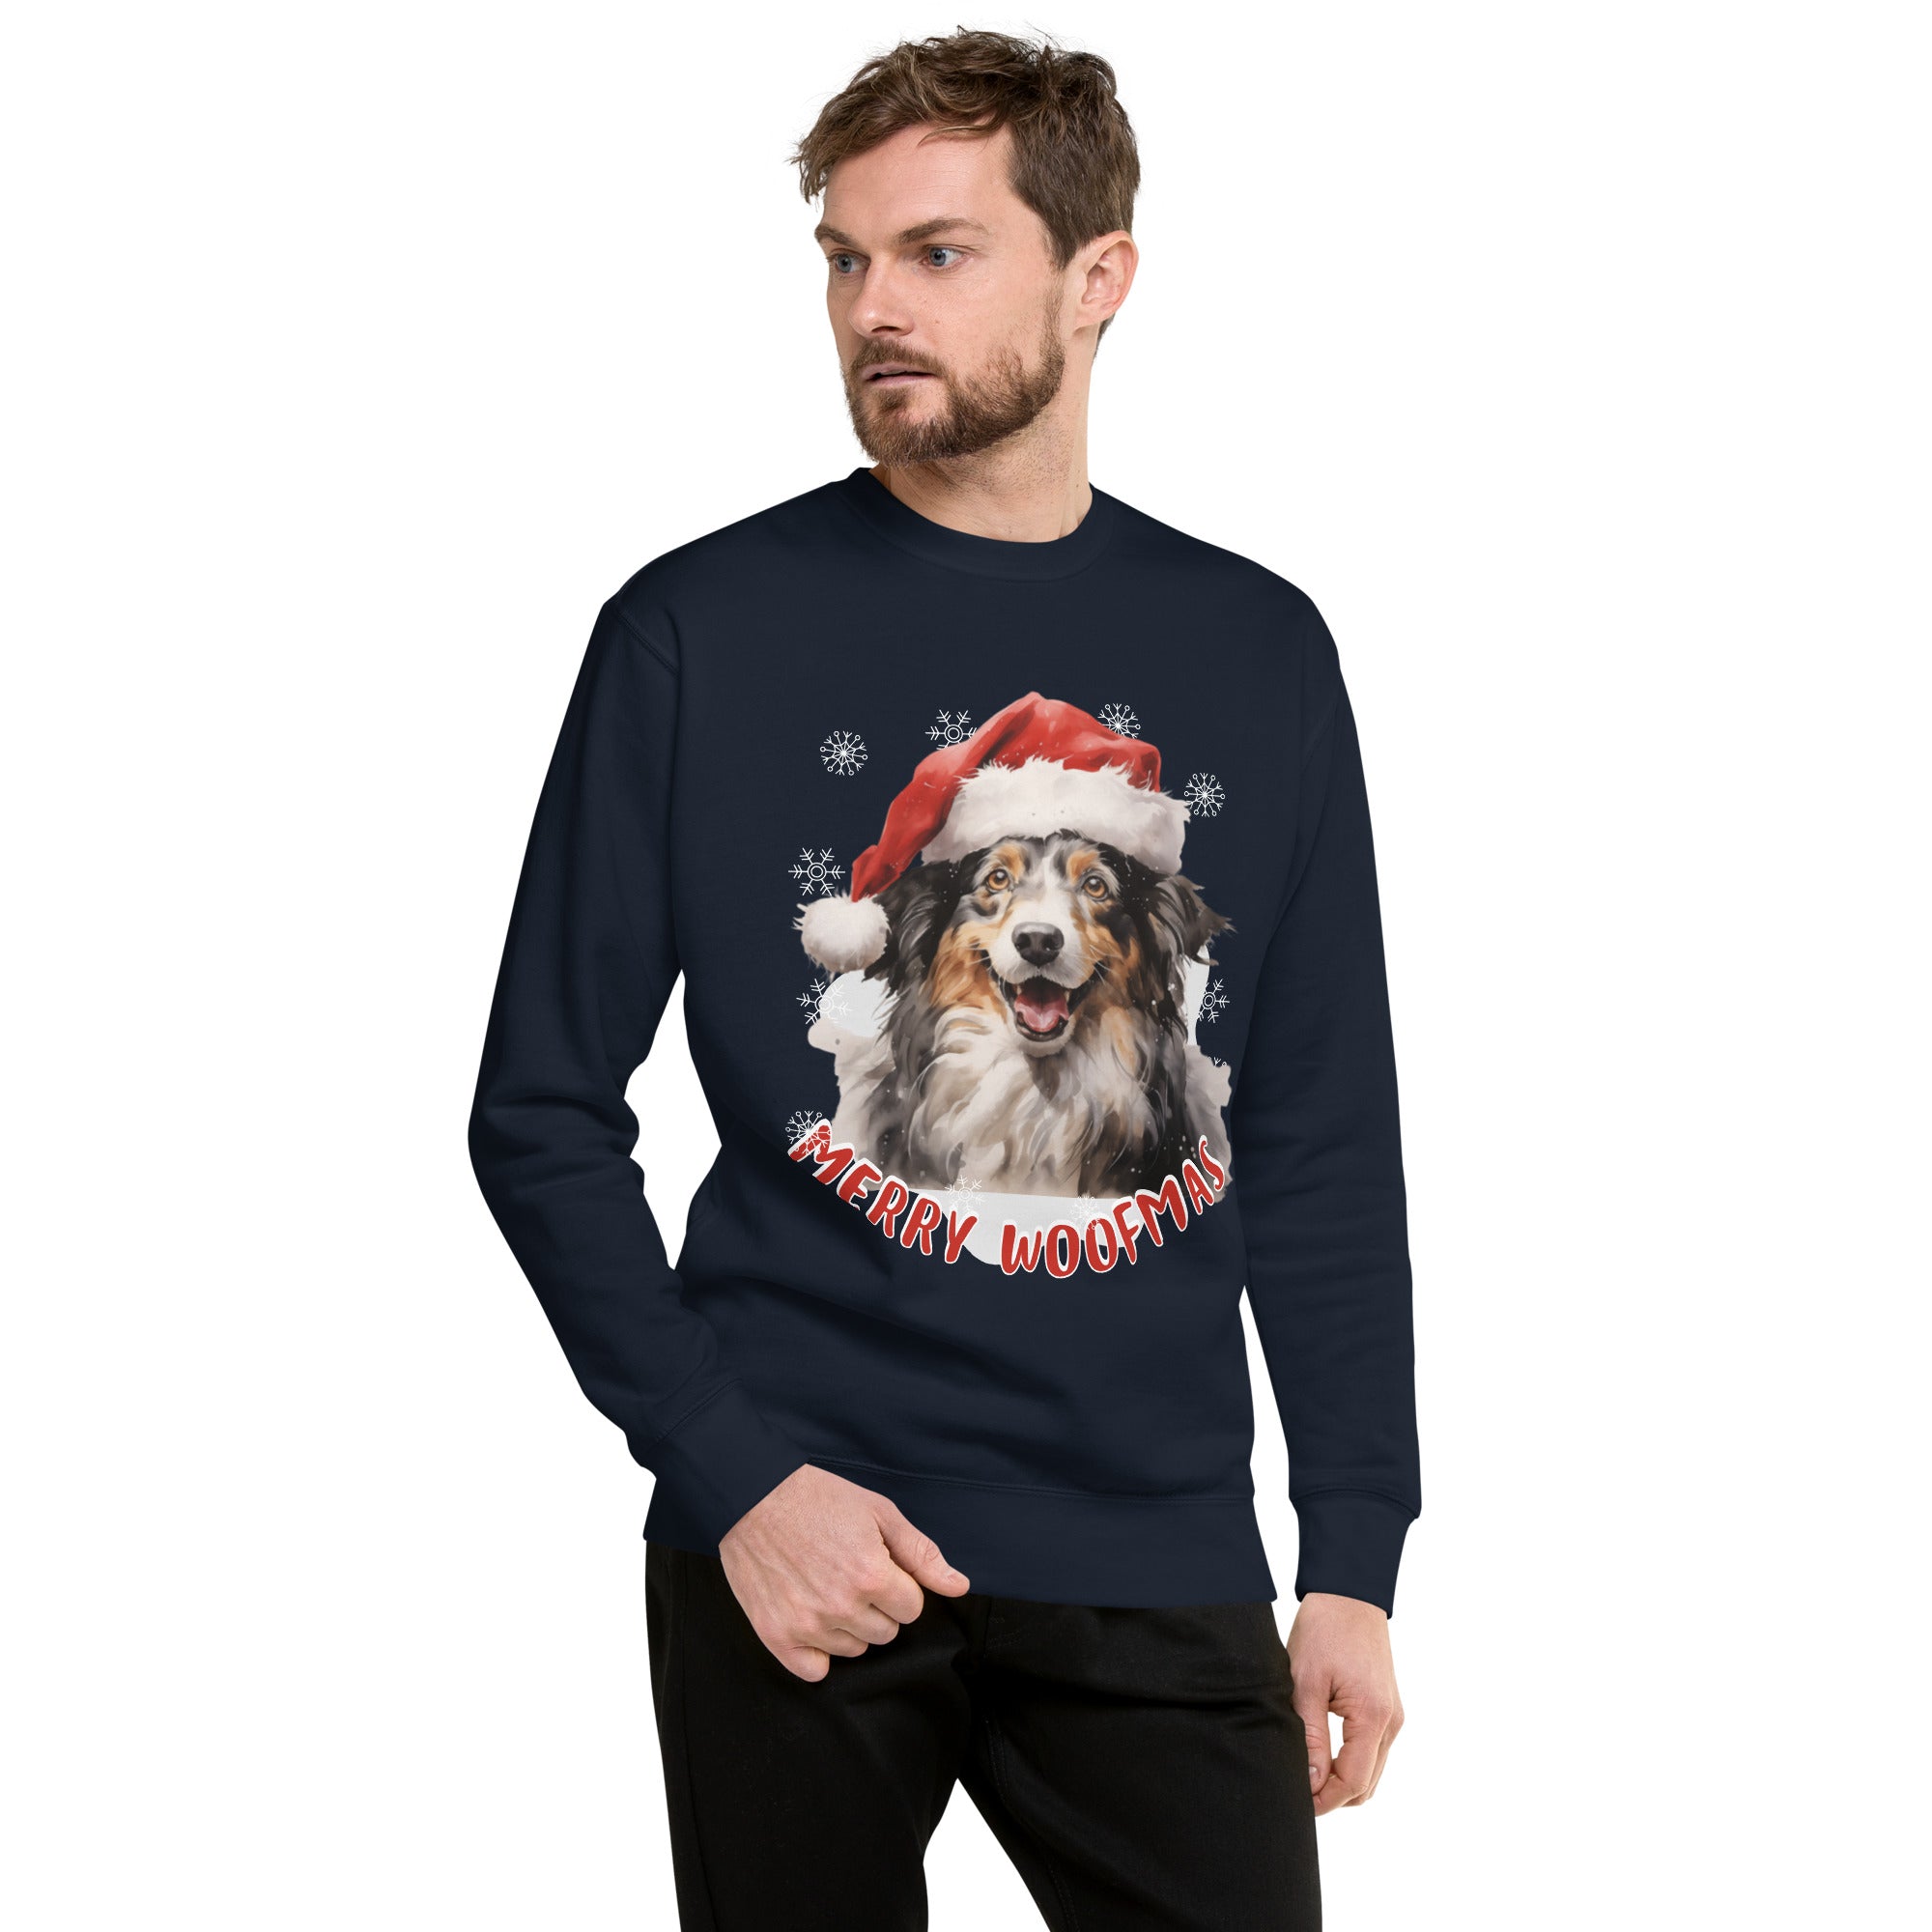 Unisex Premium Sweatshirt Border Collie - Merry Woofmas